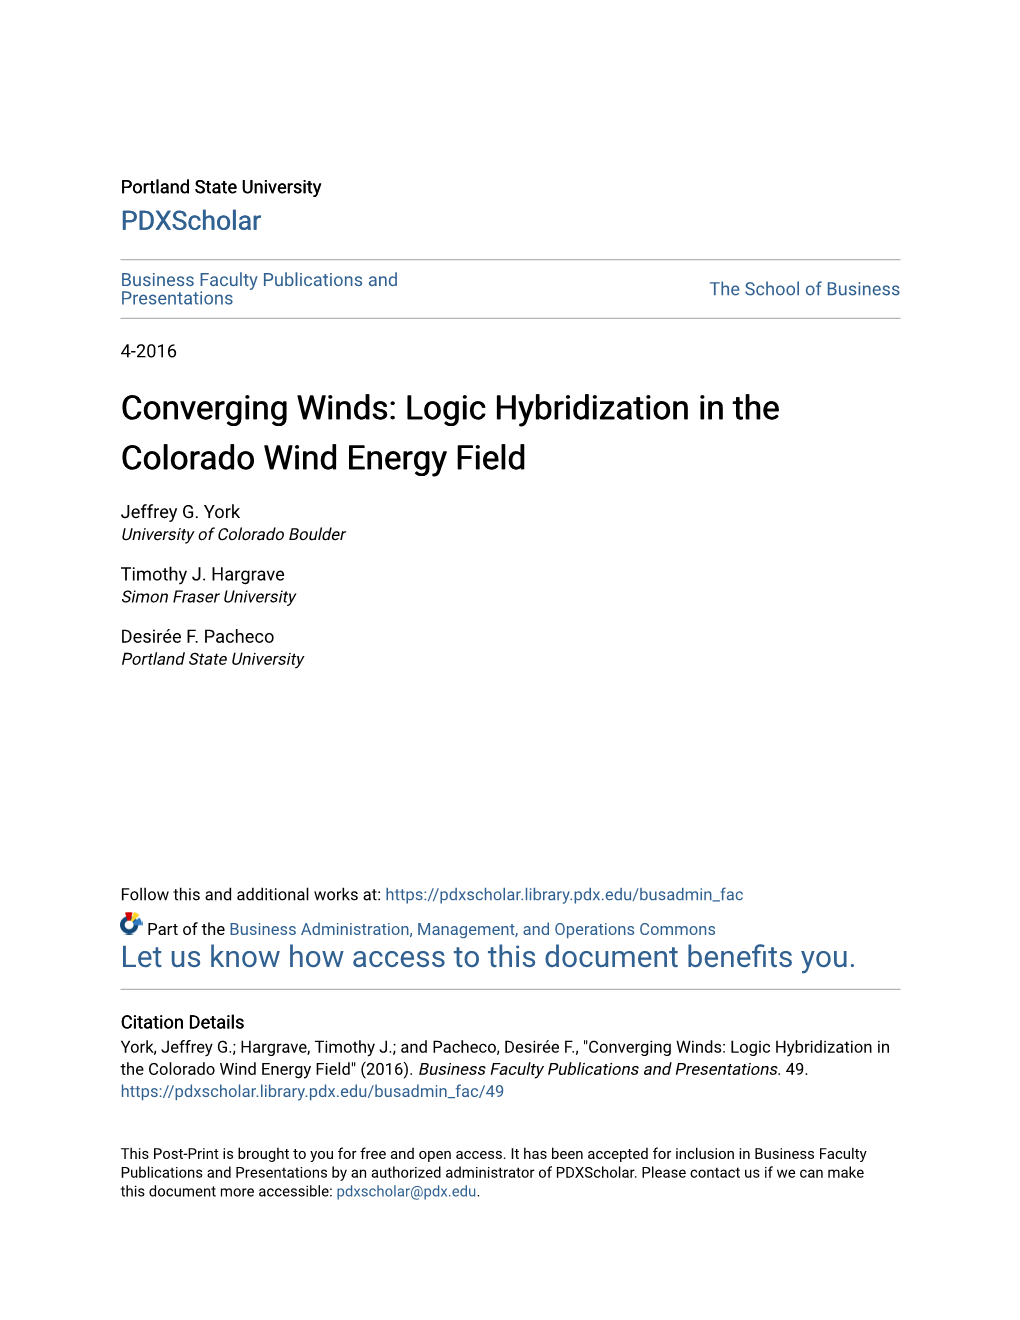 Logic Hybridization in the Colorado Wind Energy Field